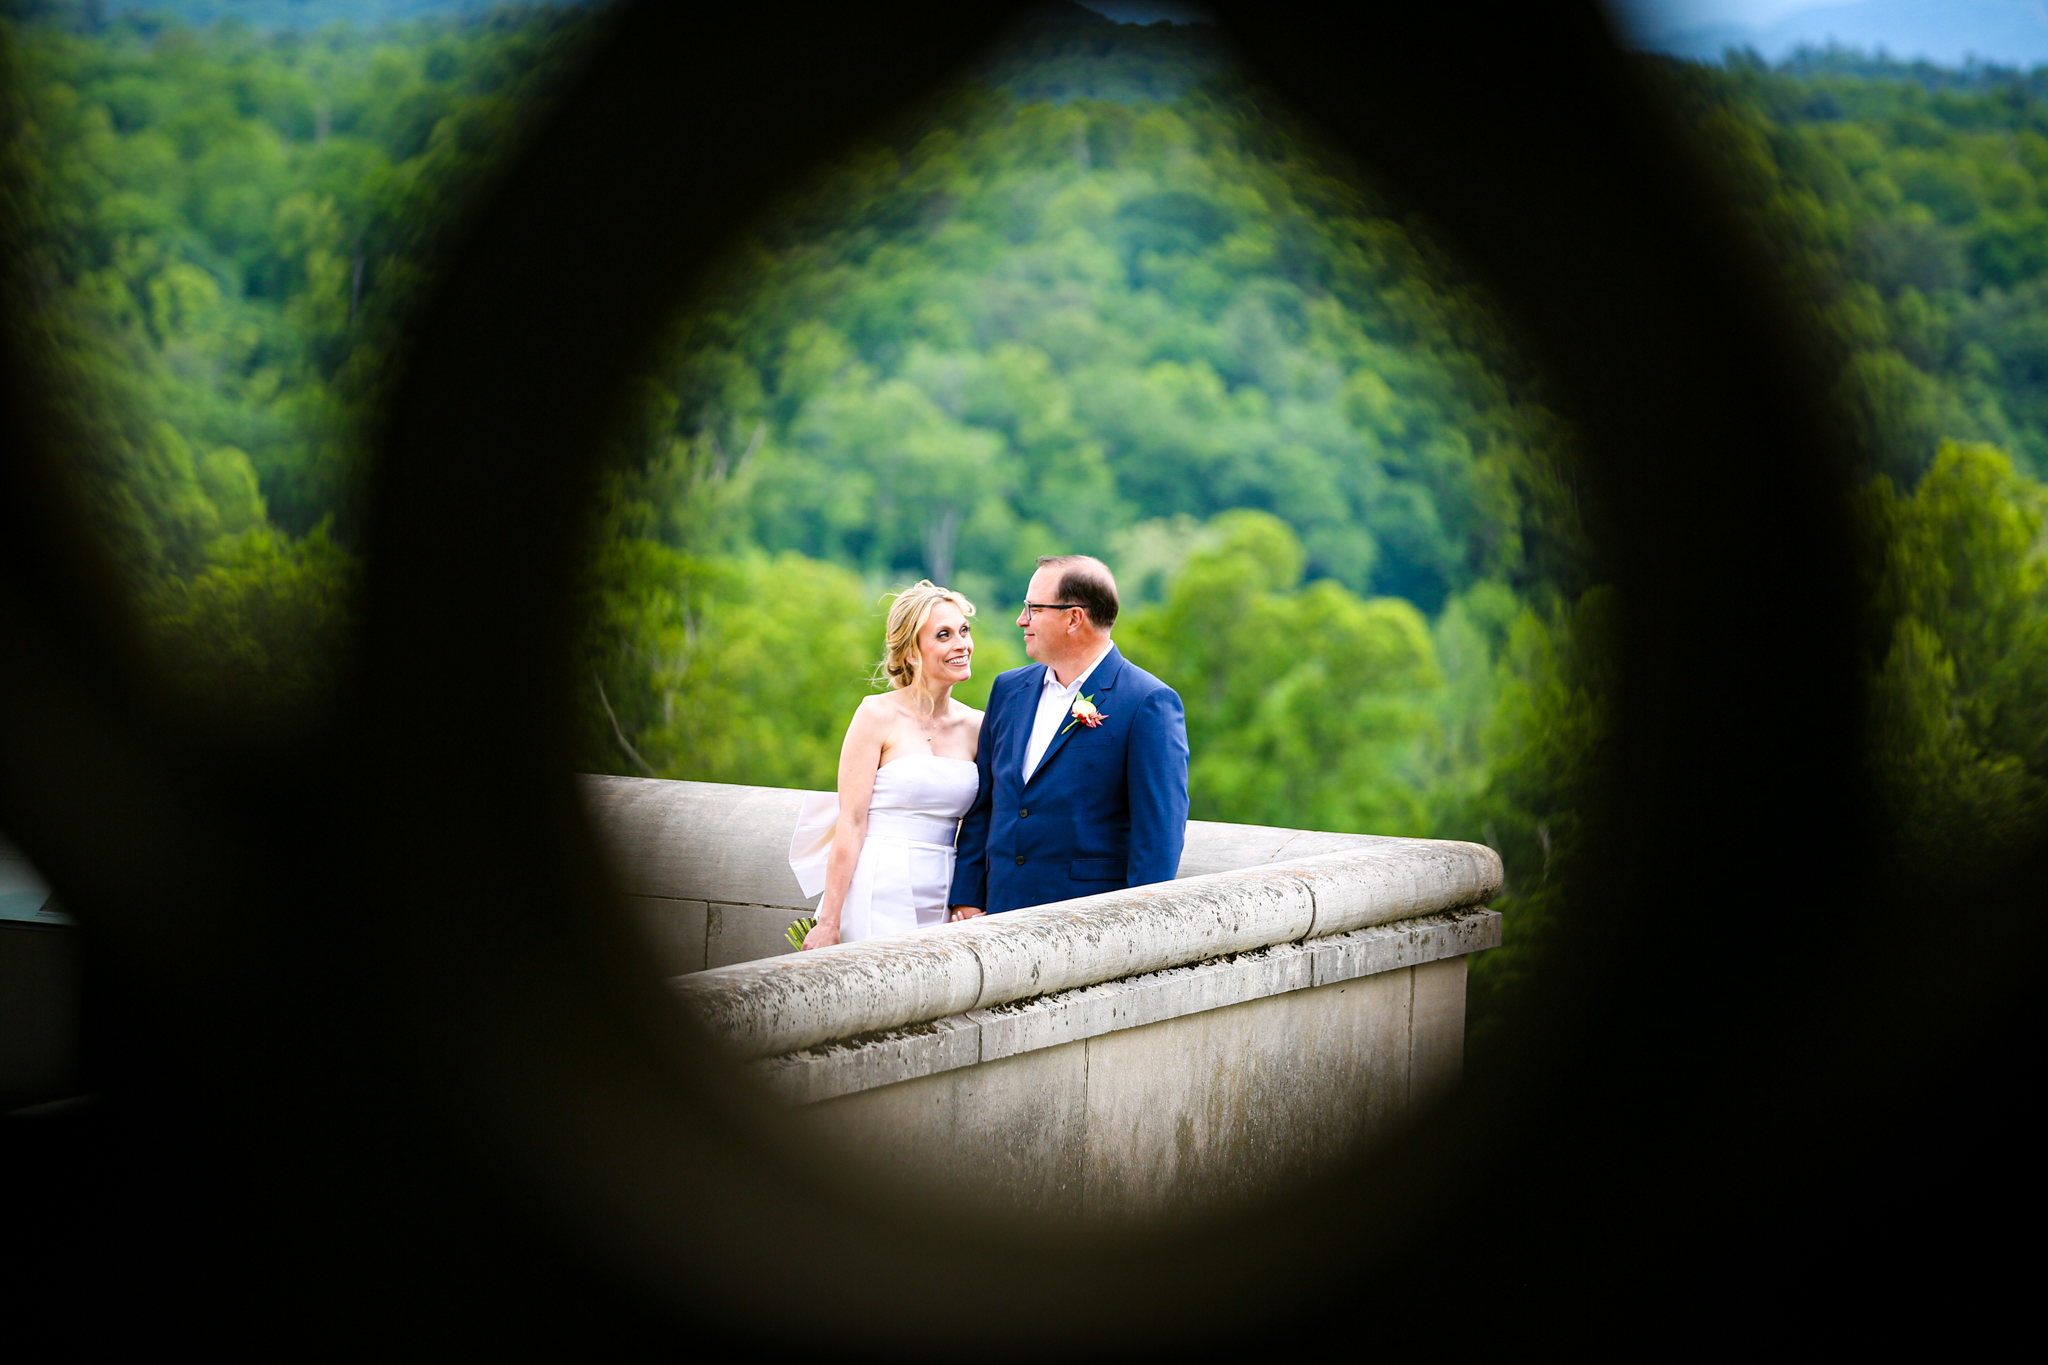 Light Shifter Studios captures proposals, elopements, and wedding days at the Biltmore.